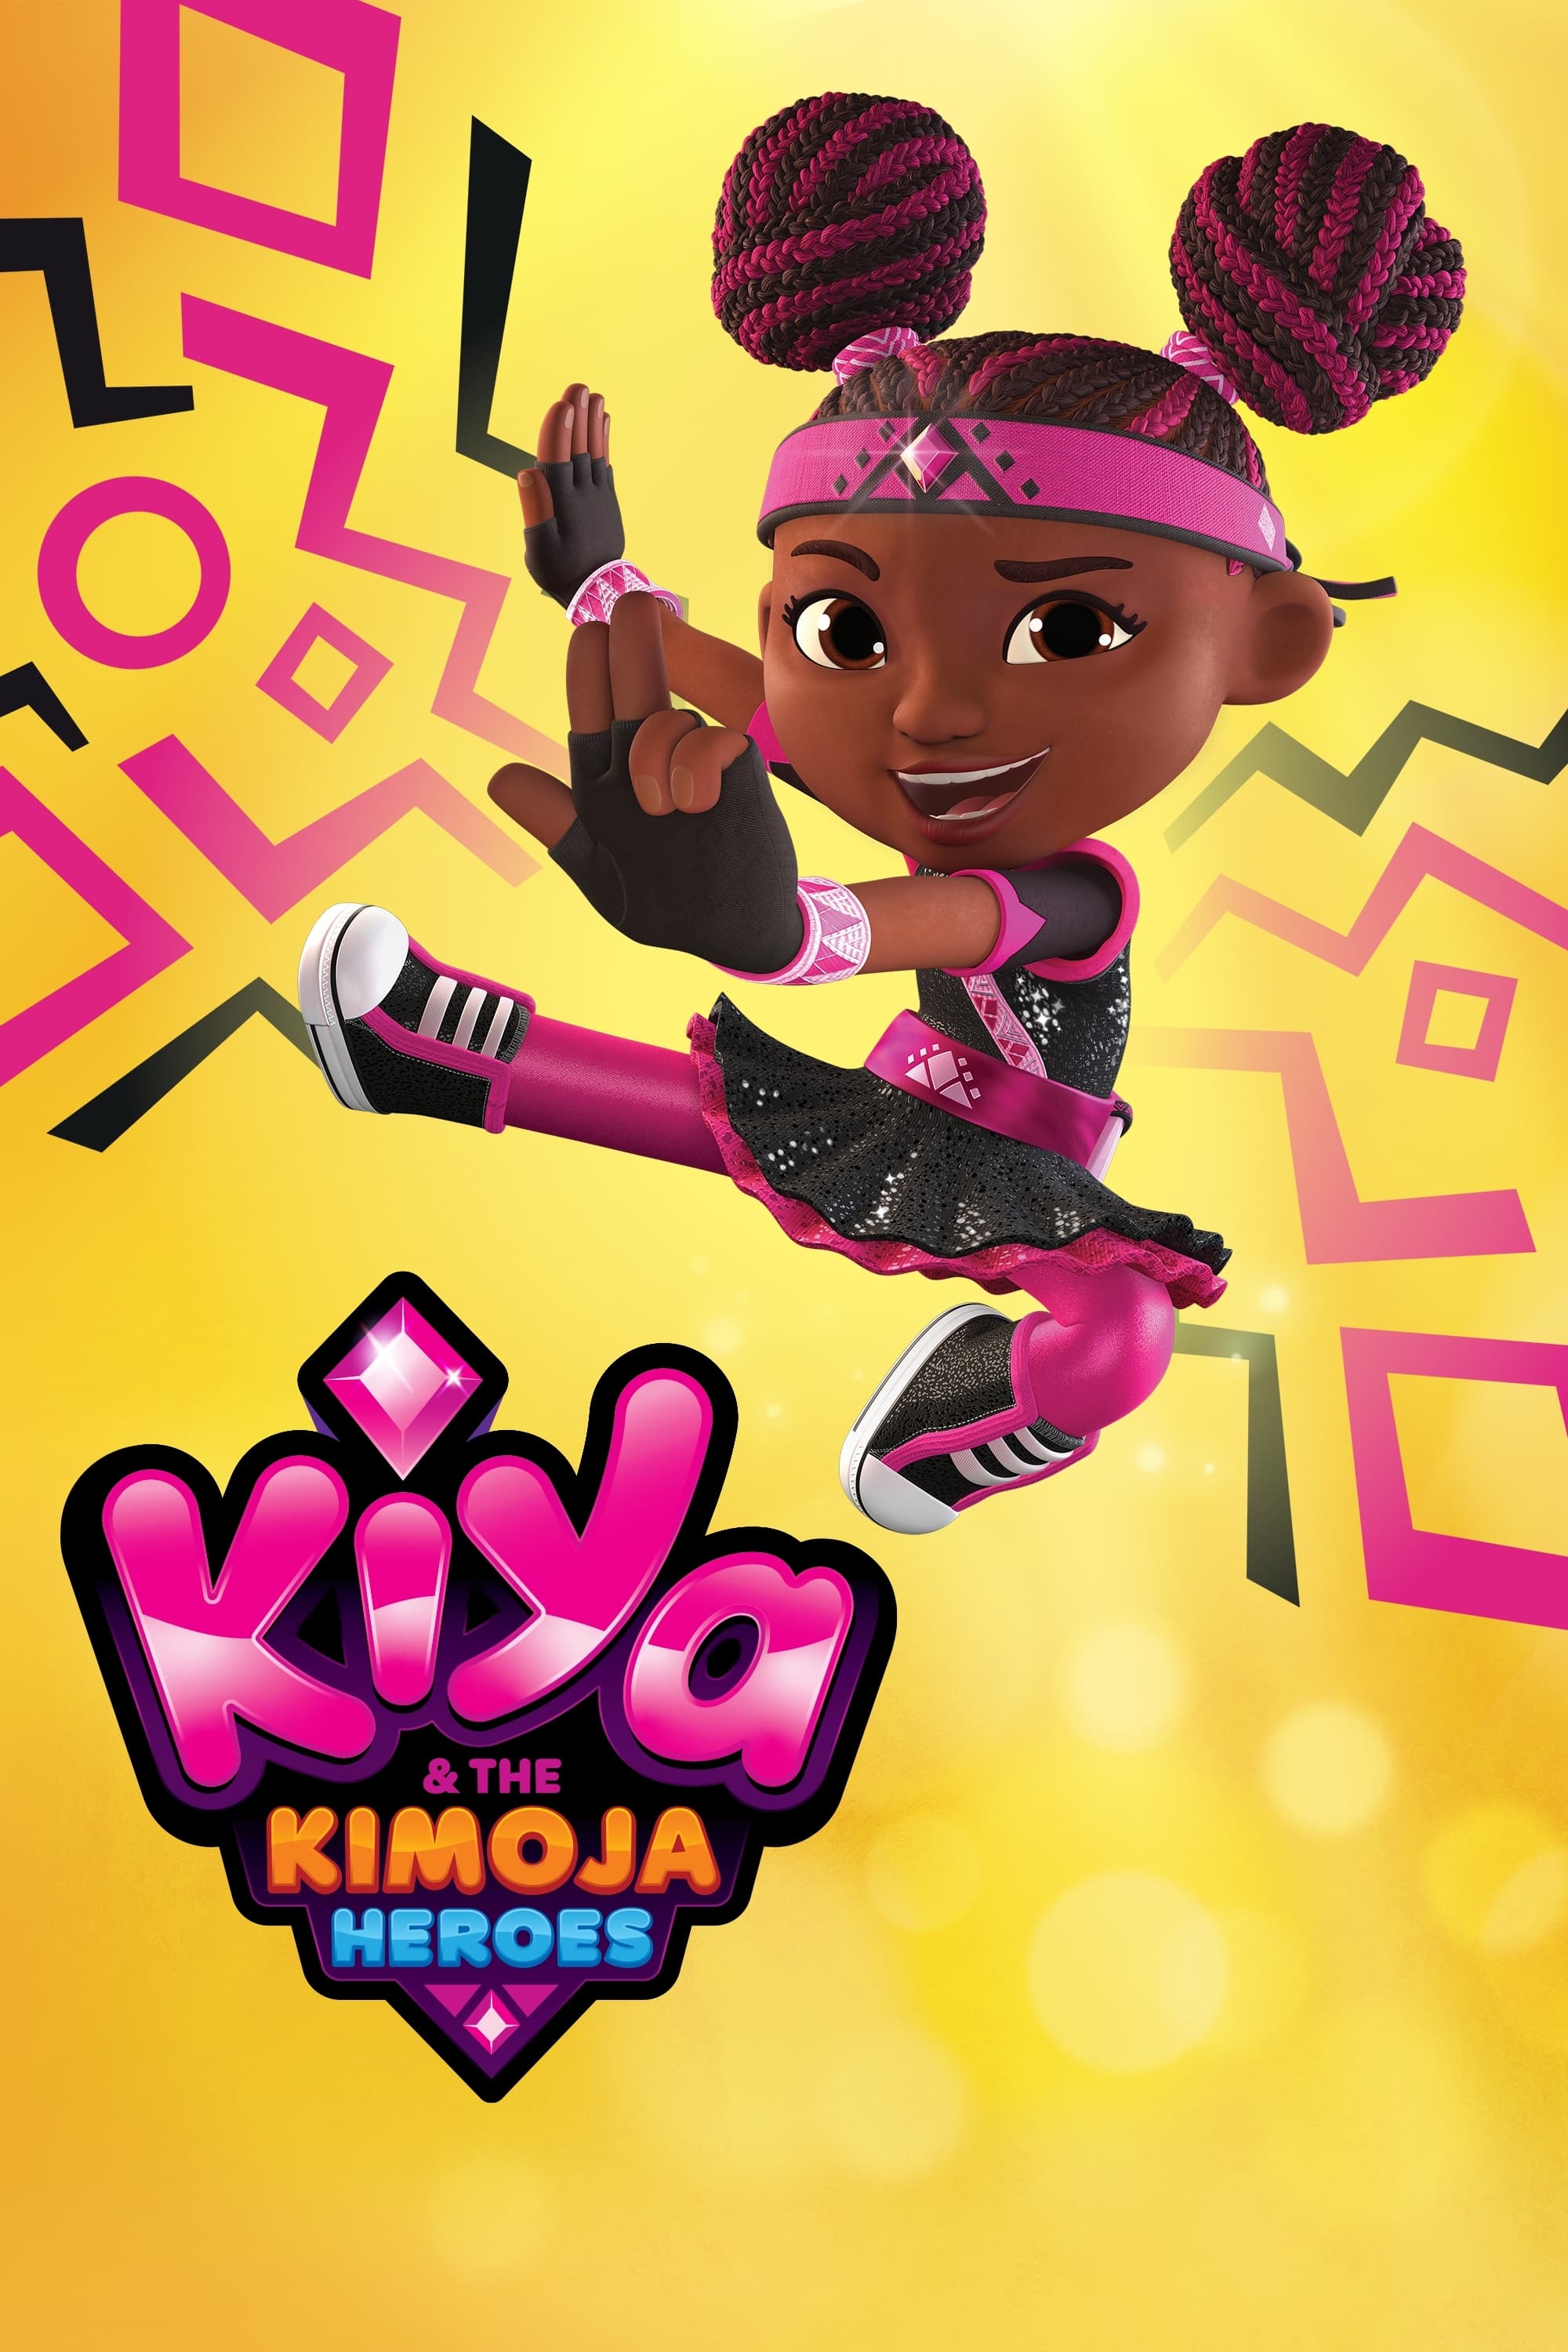 TV ratings for Kiya & The Kimoja Heroes in India. Disney+ TV series